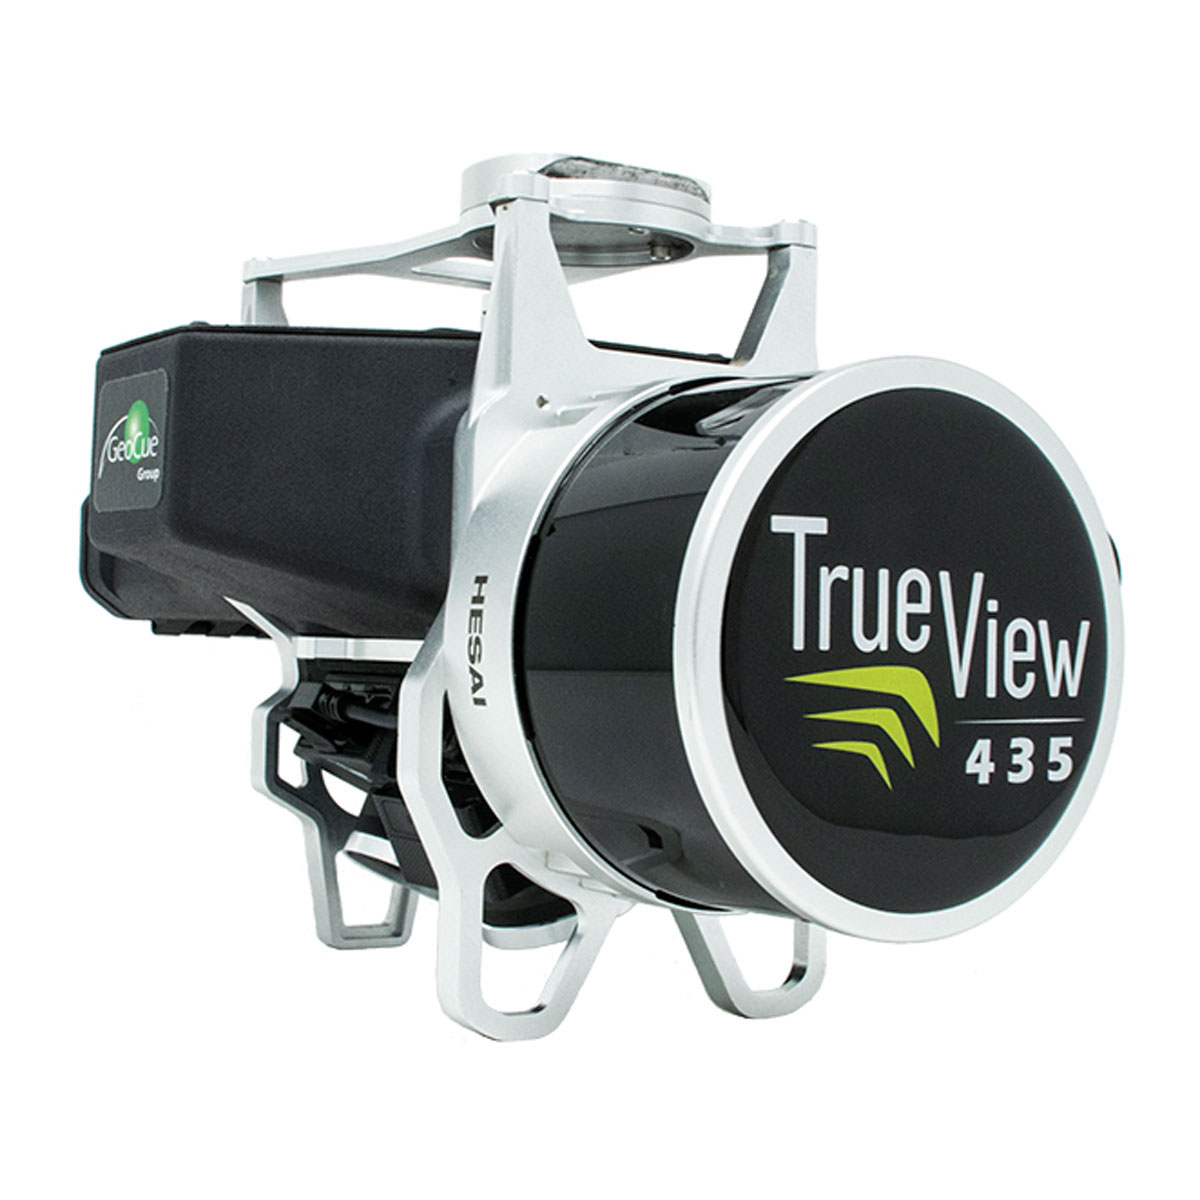 TrueView 435 3D-Imaging-System von Geocue 